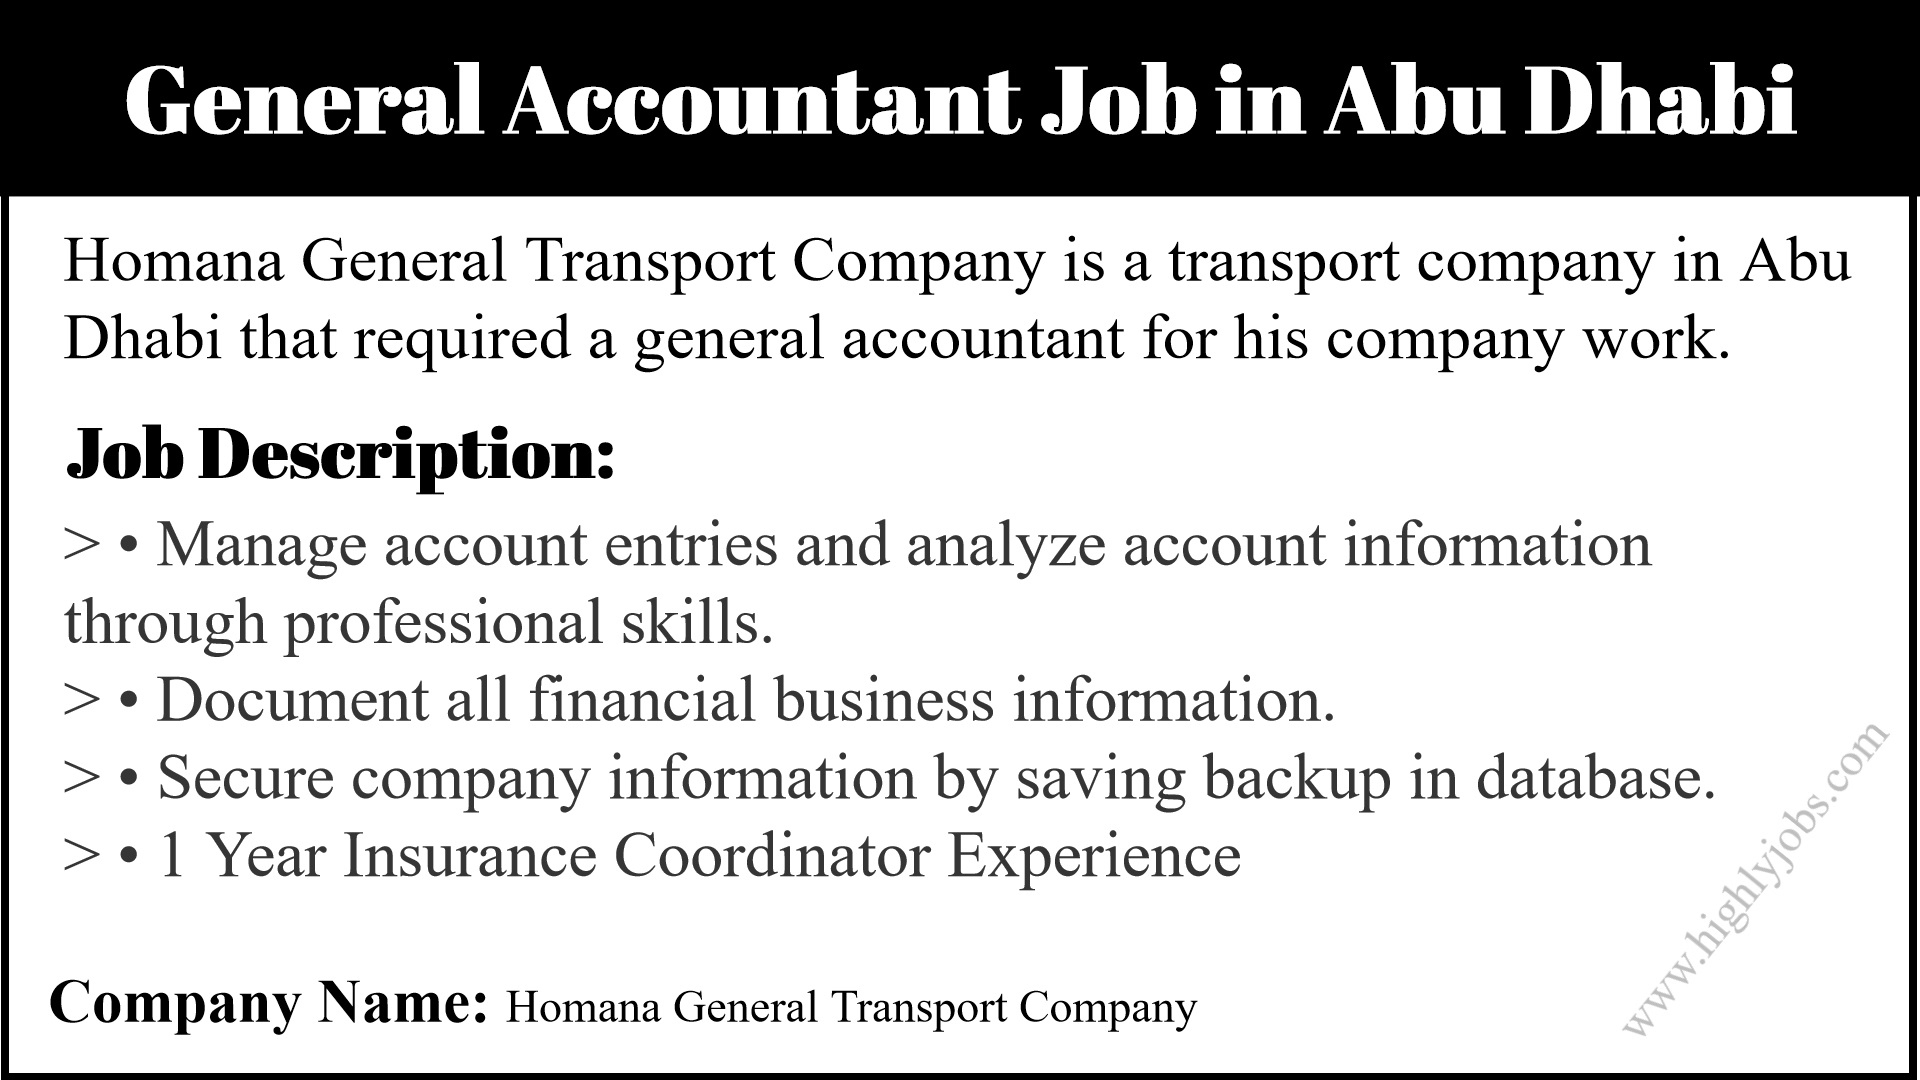 General Accountant Job in Abu Dhabi